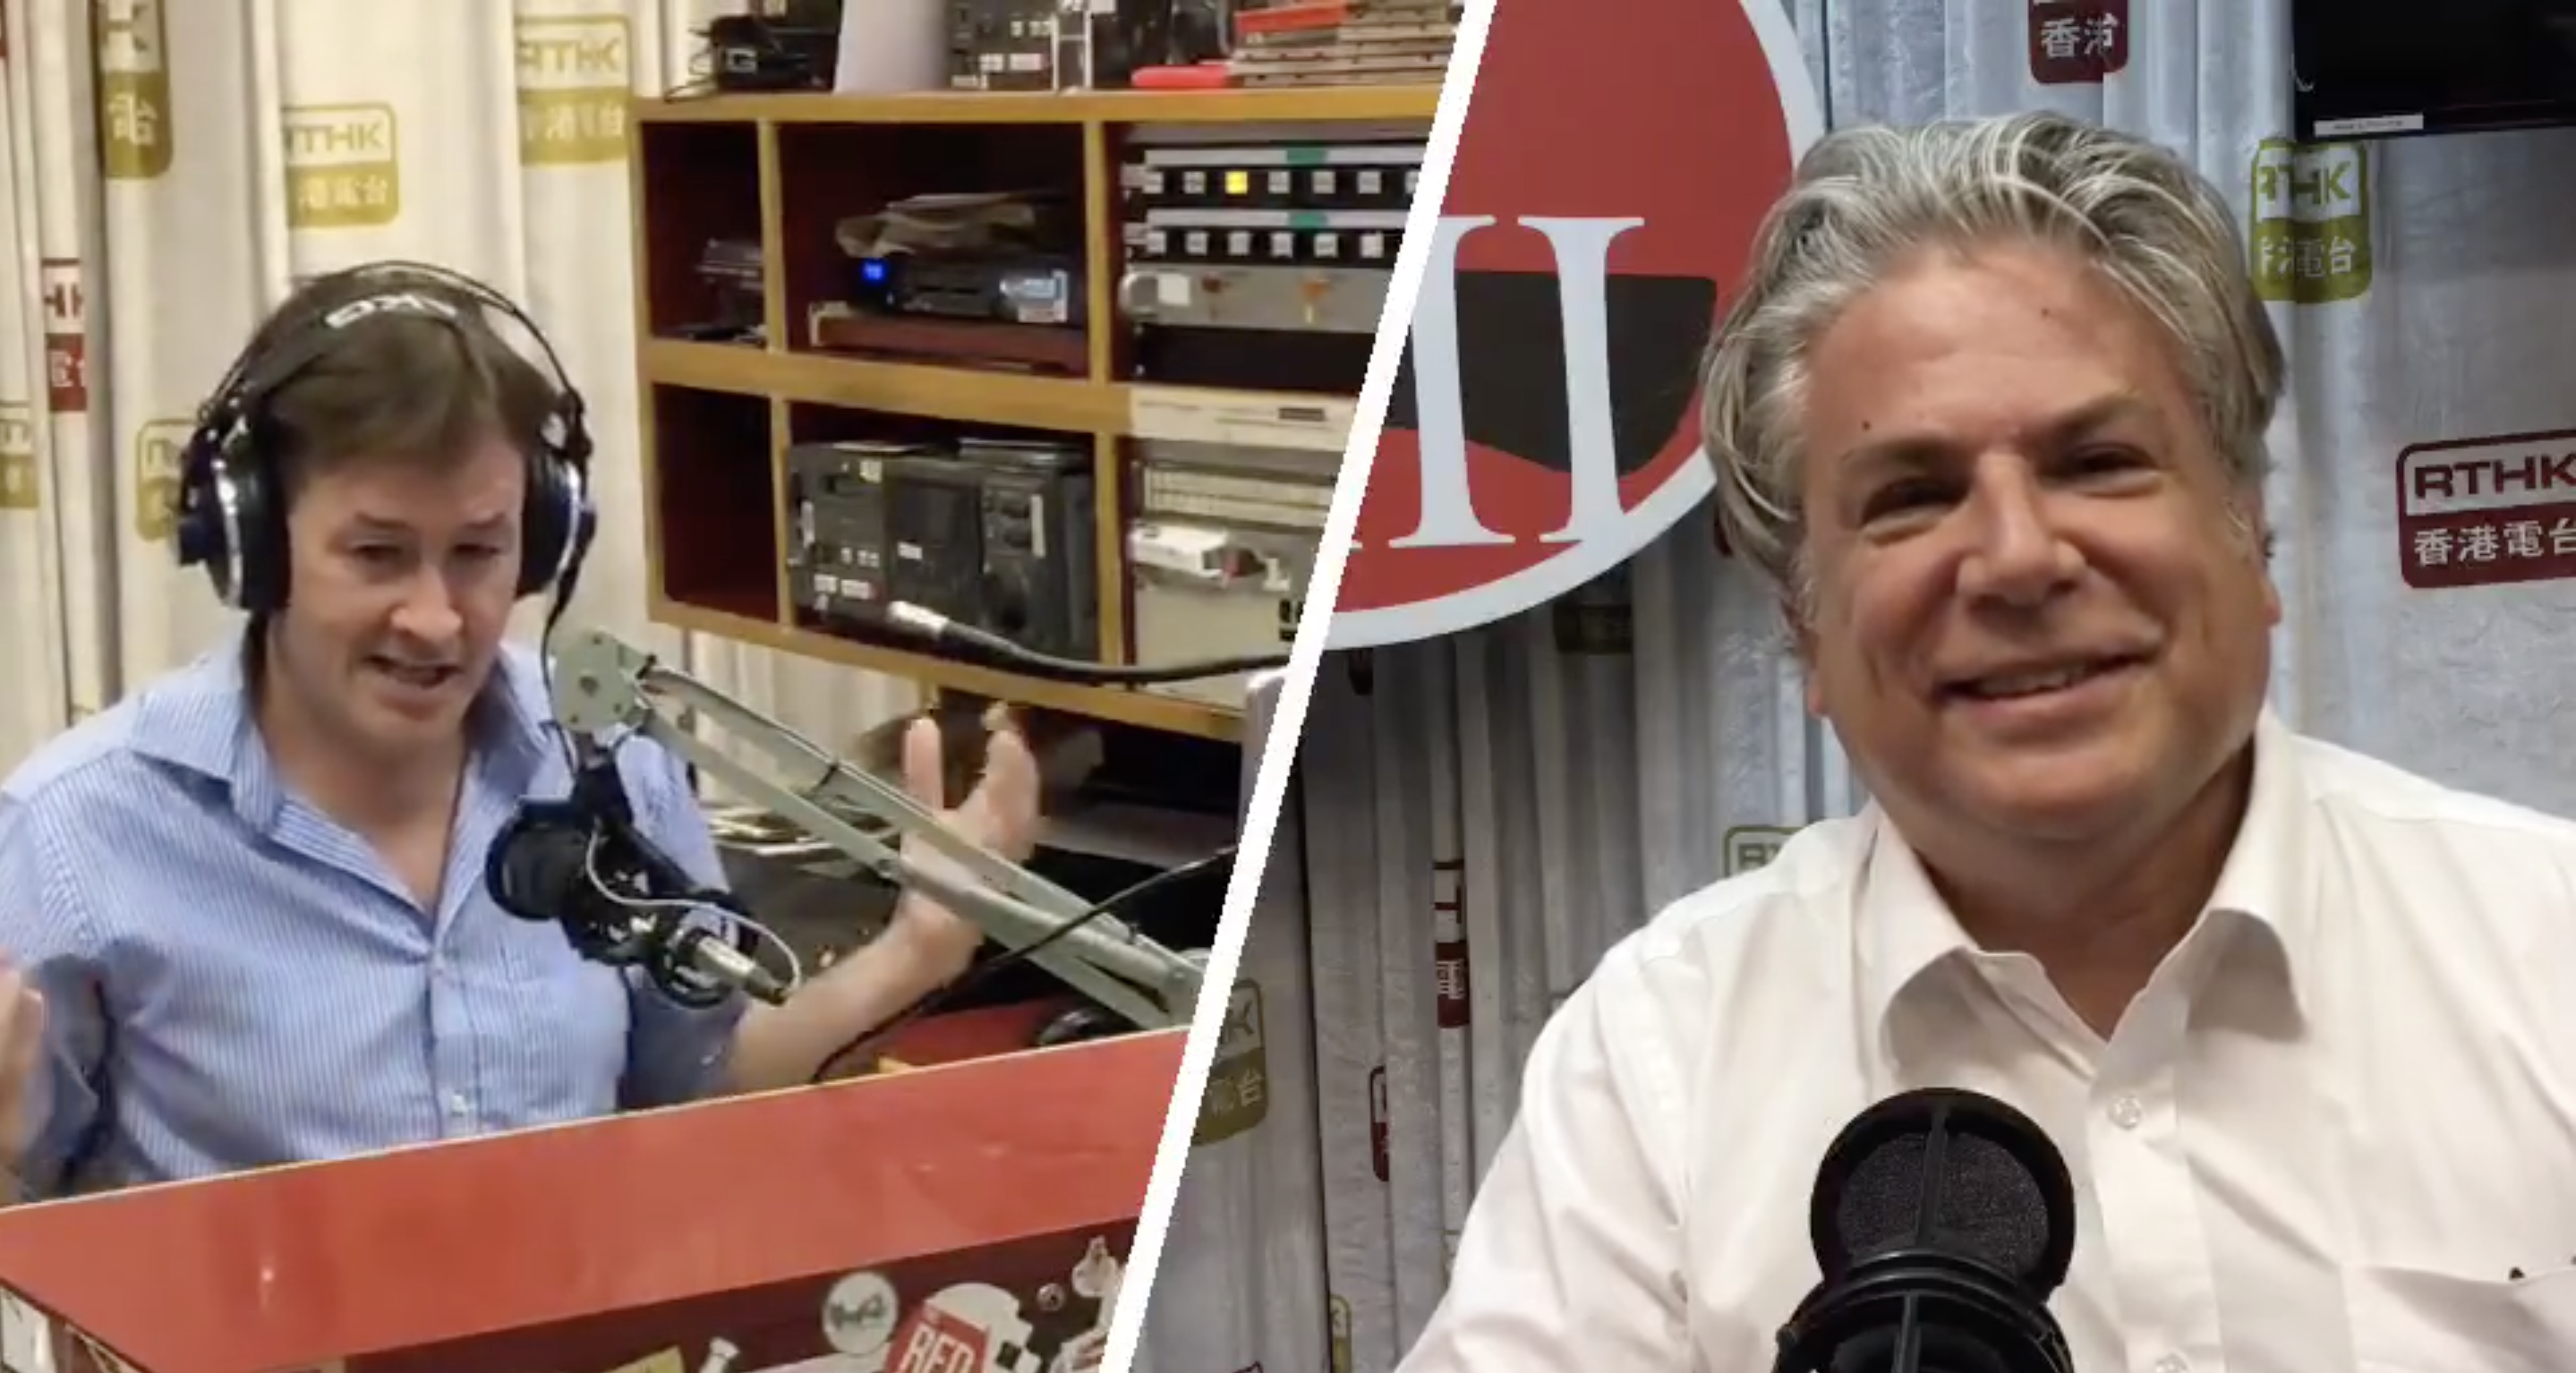 Bonus Episode: Interview with Steve on RTHK Radio 3 “Morning Brew” Show